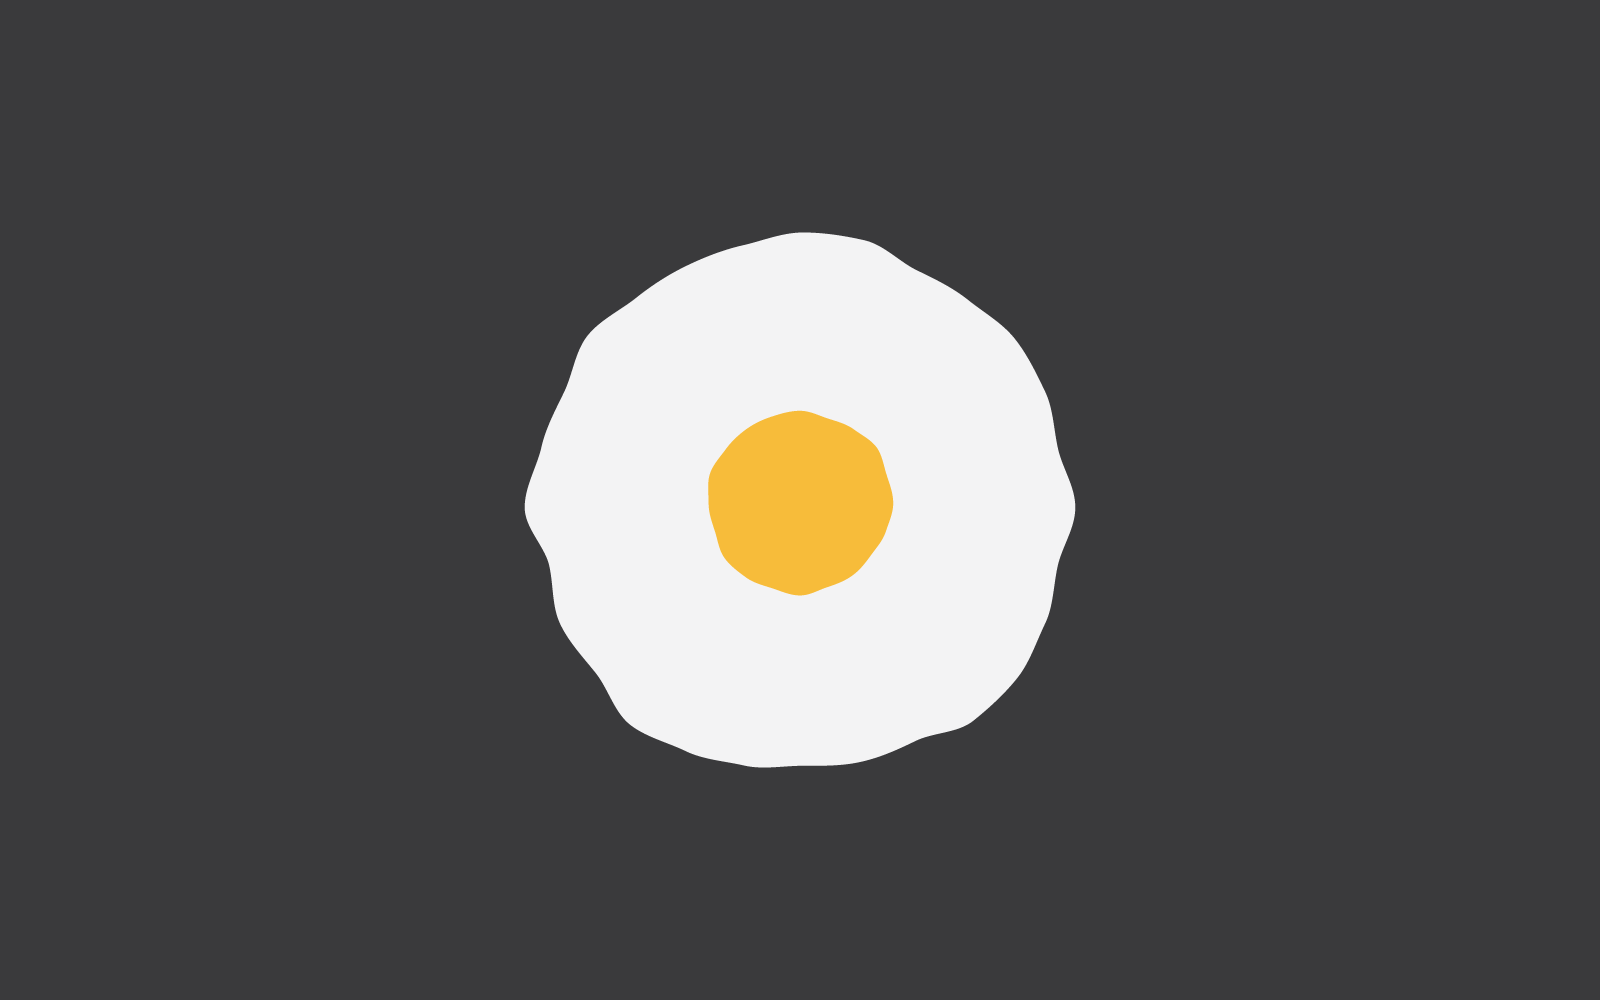 Omlet jajko ilustracja logo wektor Płaska konstrukcja